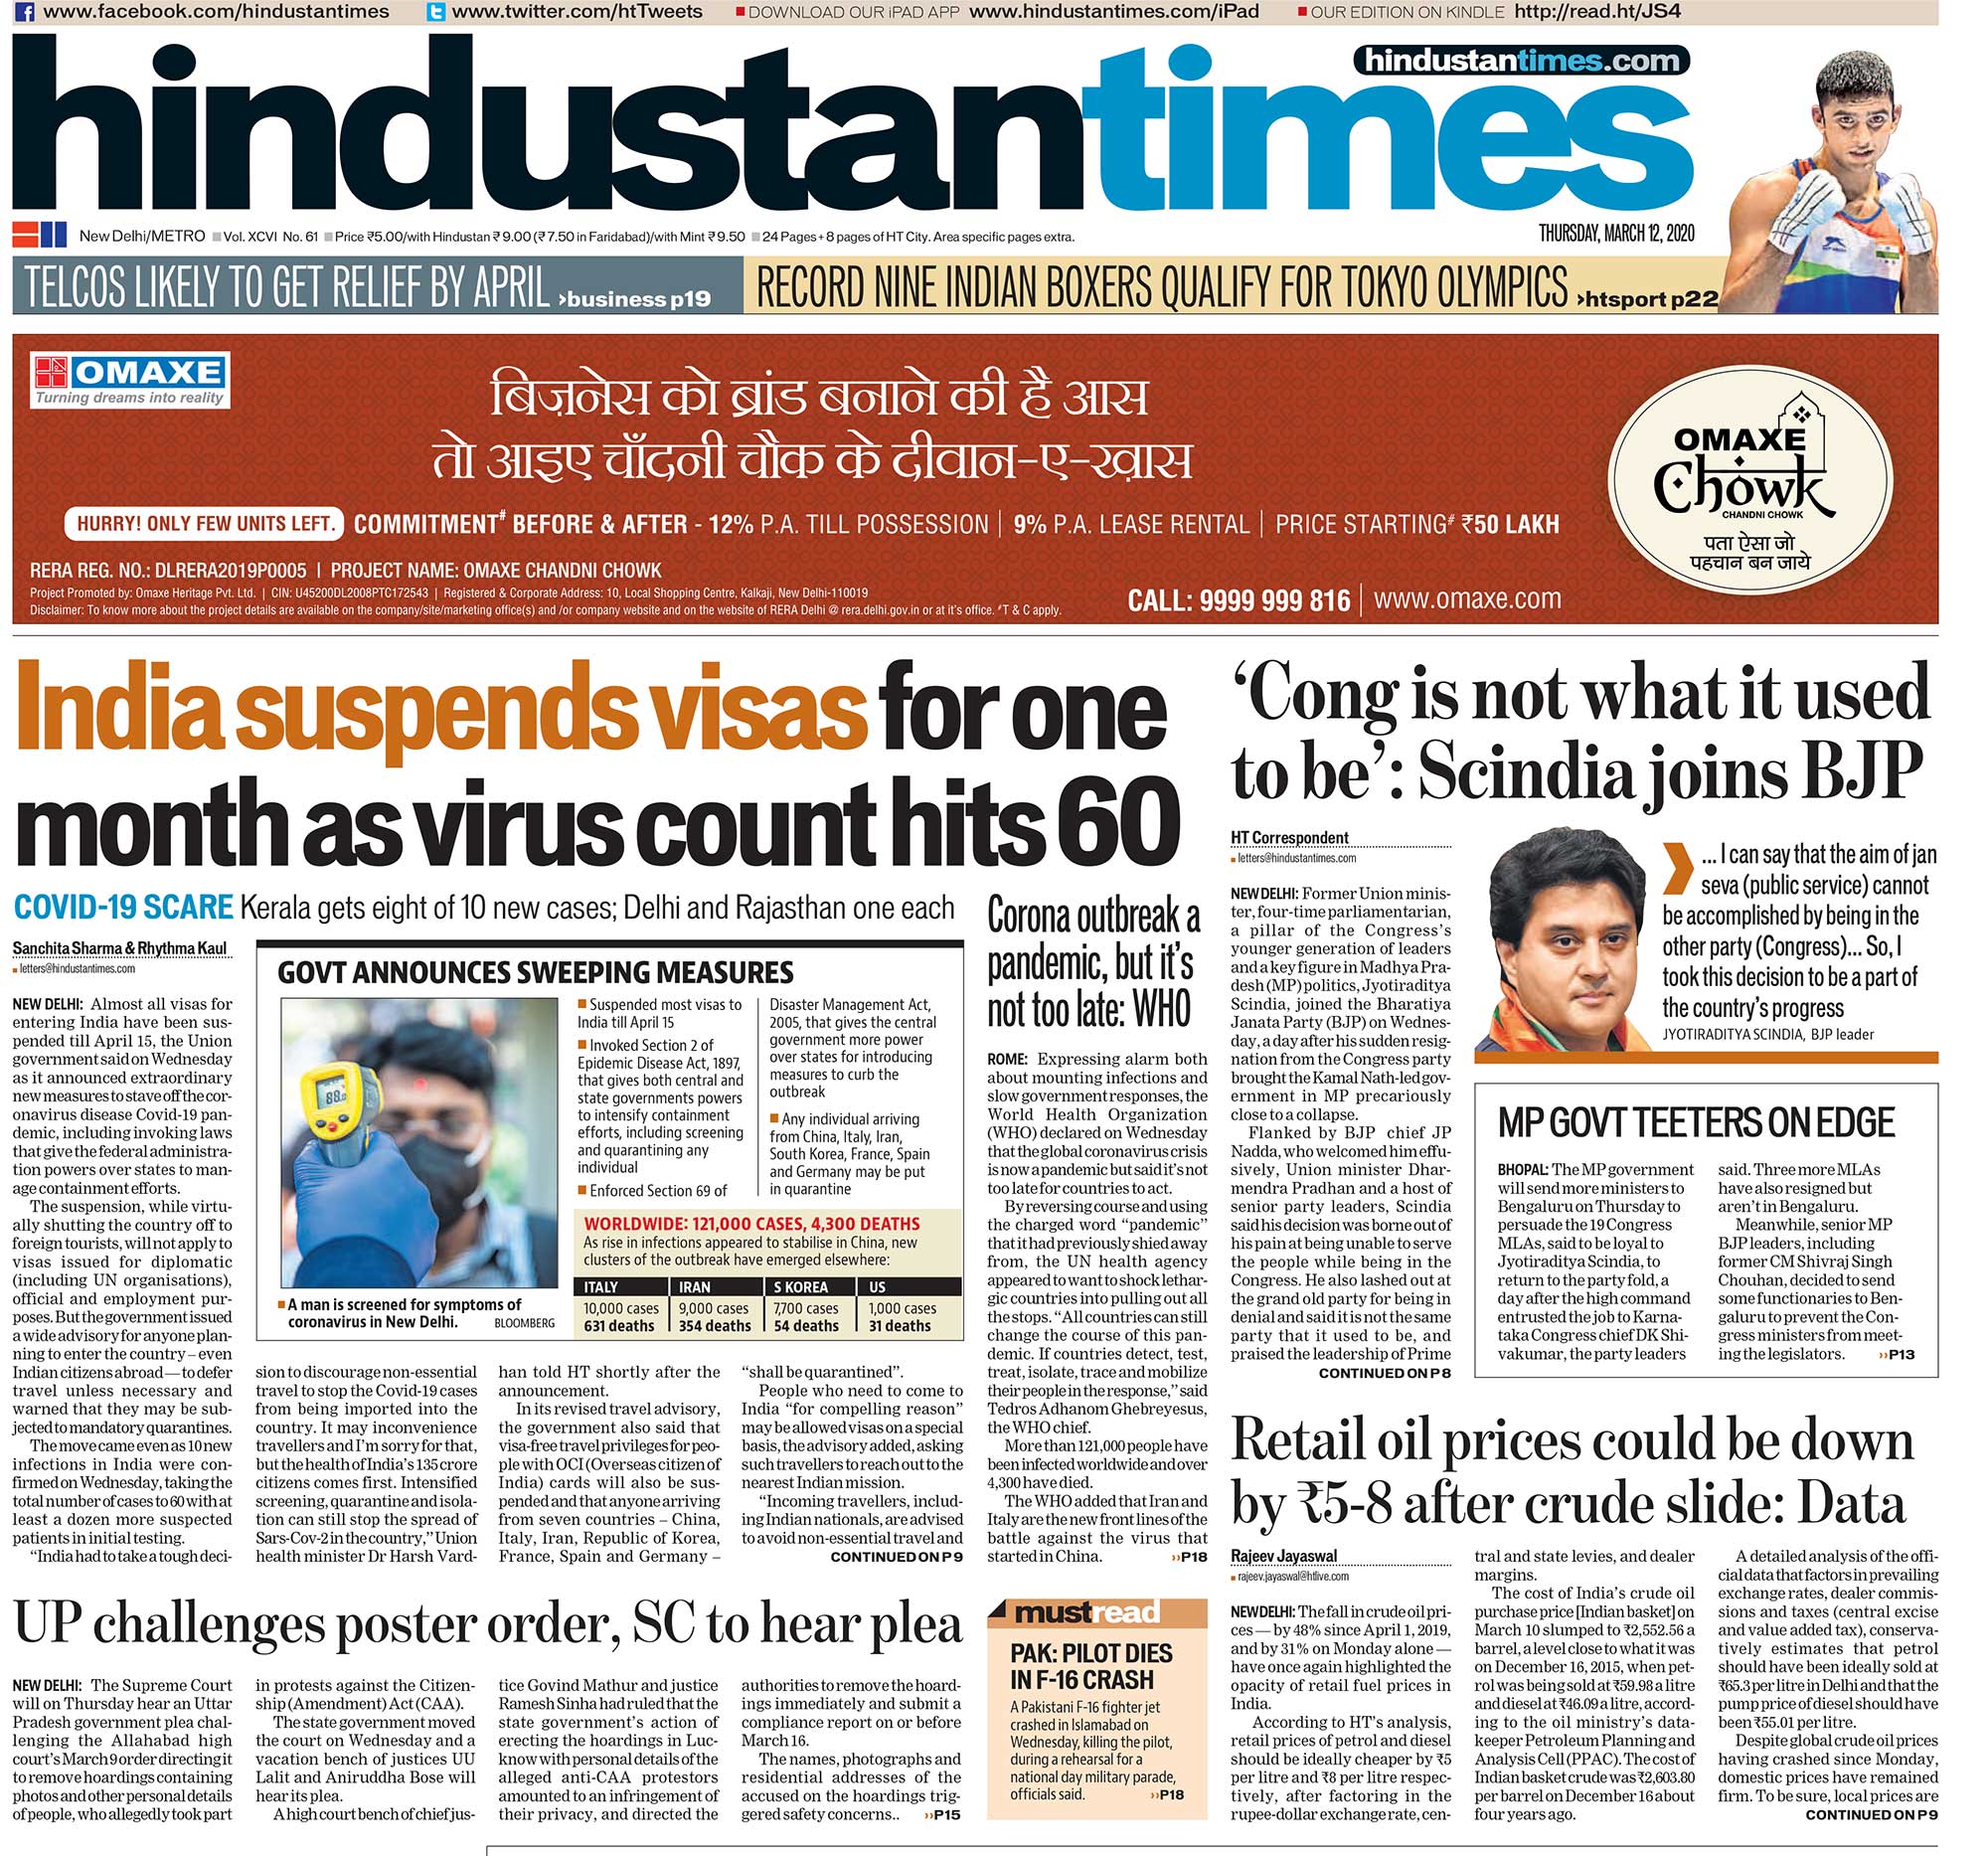 Newspaper Headlines: India Suspends Visas Till April 15 Amid Coronavirus Scare & Other Top Stories